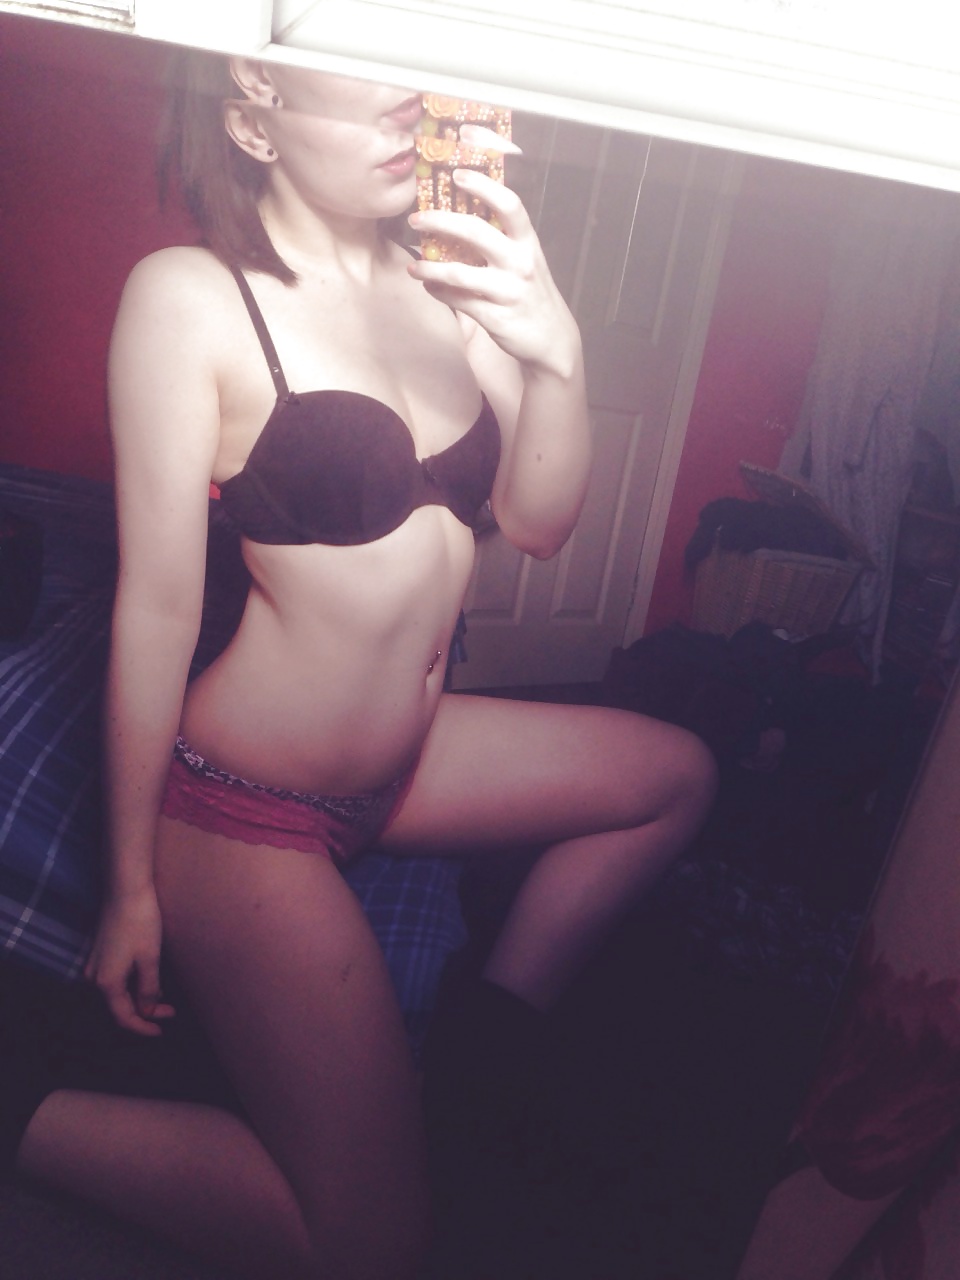 Free GABBY young uk teen girl amateur tits selfshot facebook photos 50003491